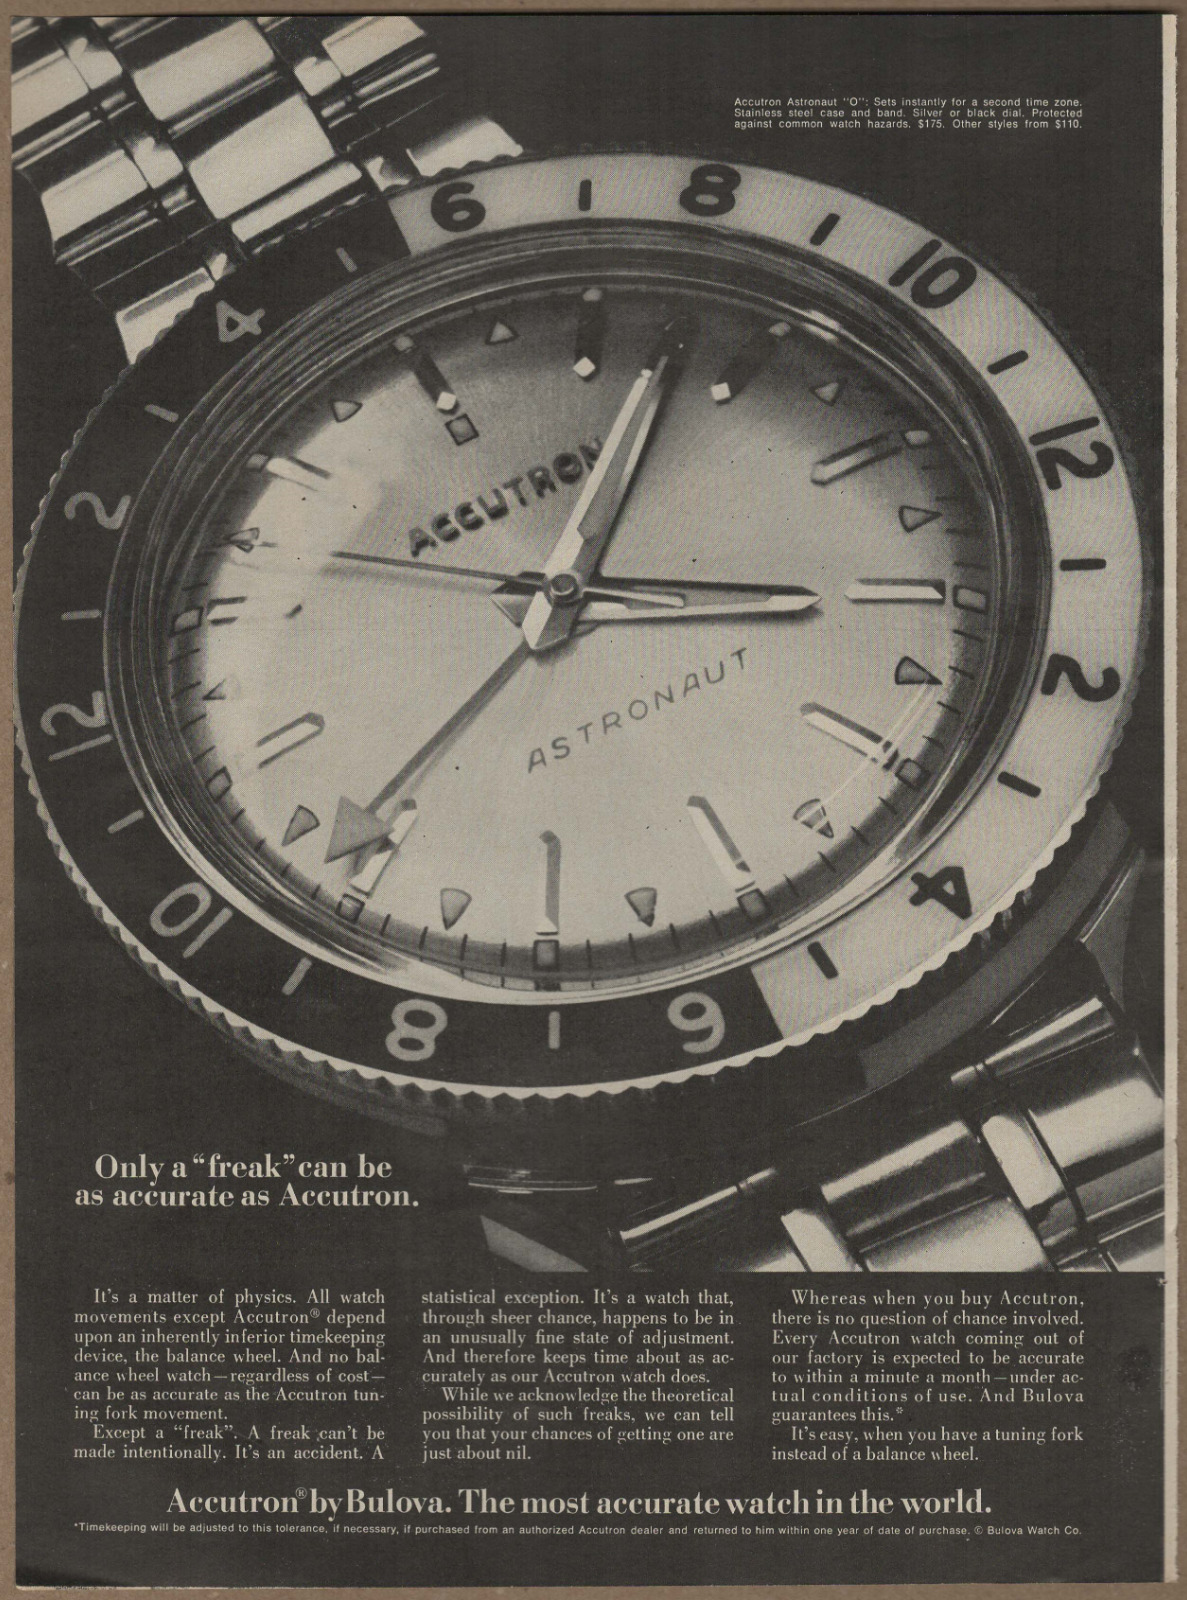 1969 Bulova Accutron Astronaut Watch Vintage Print Ad A Matter of Physics